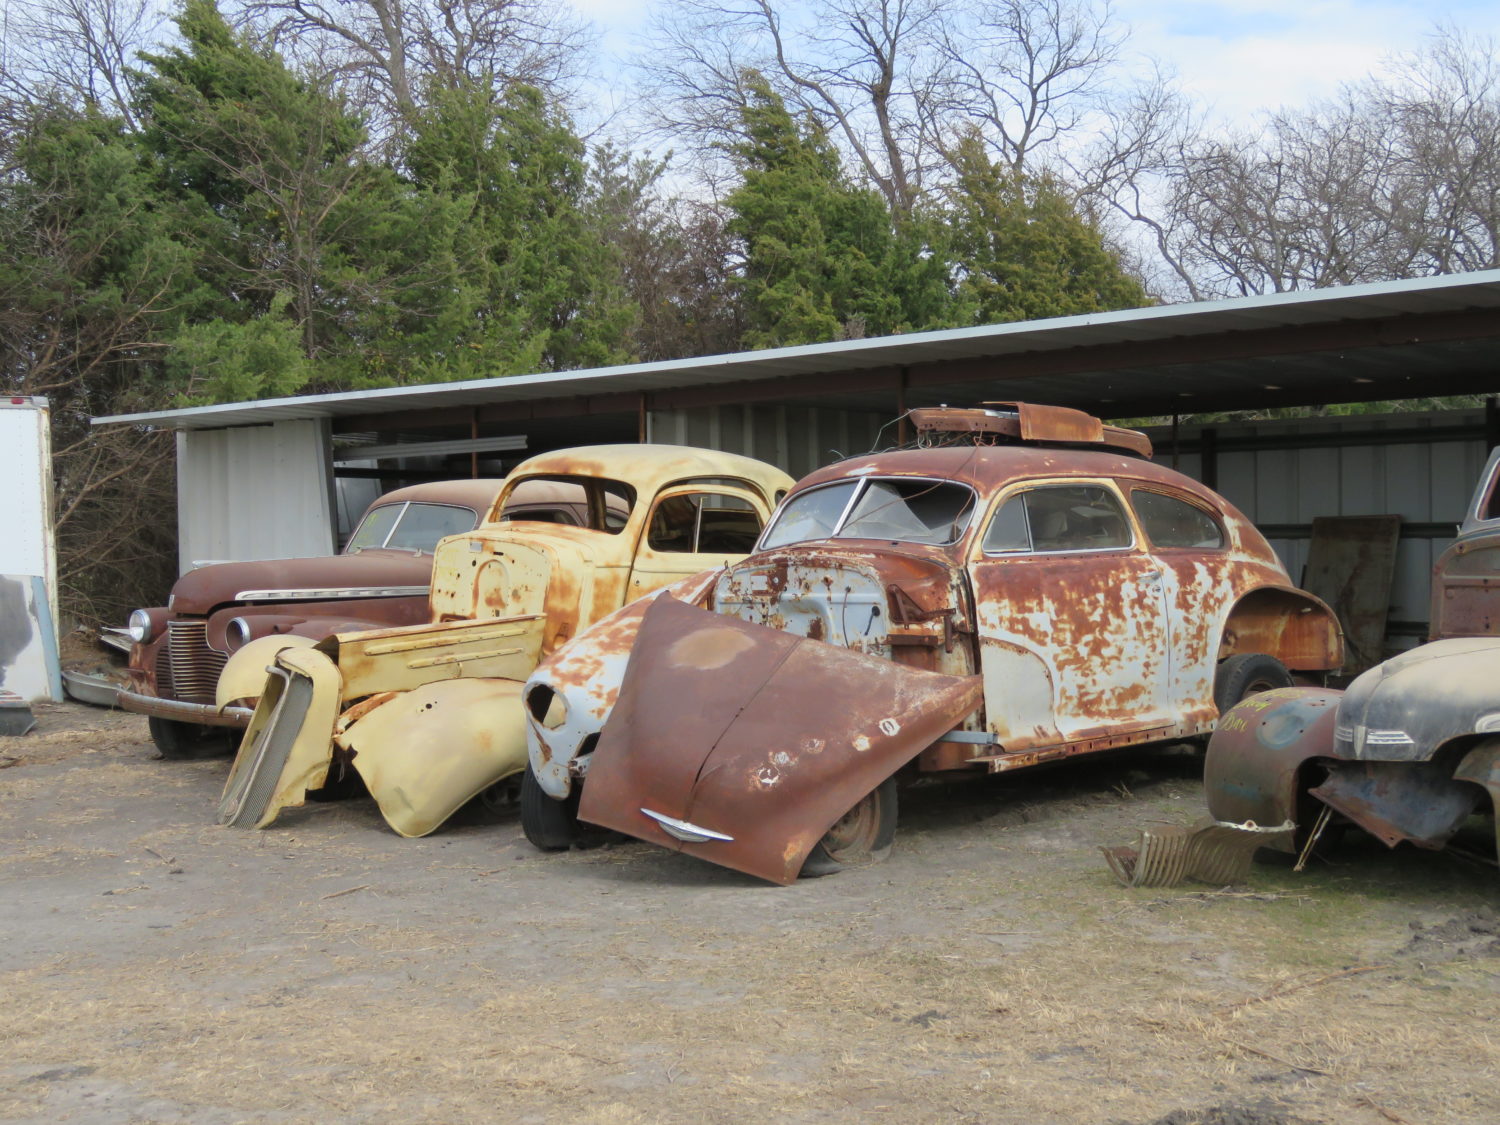 200 Plus Classic Cars at Auction! Dennis Collin's Coffee Walk Presents Restoration Revival Auction!  - image 10